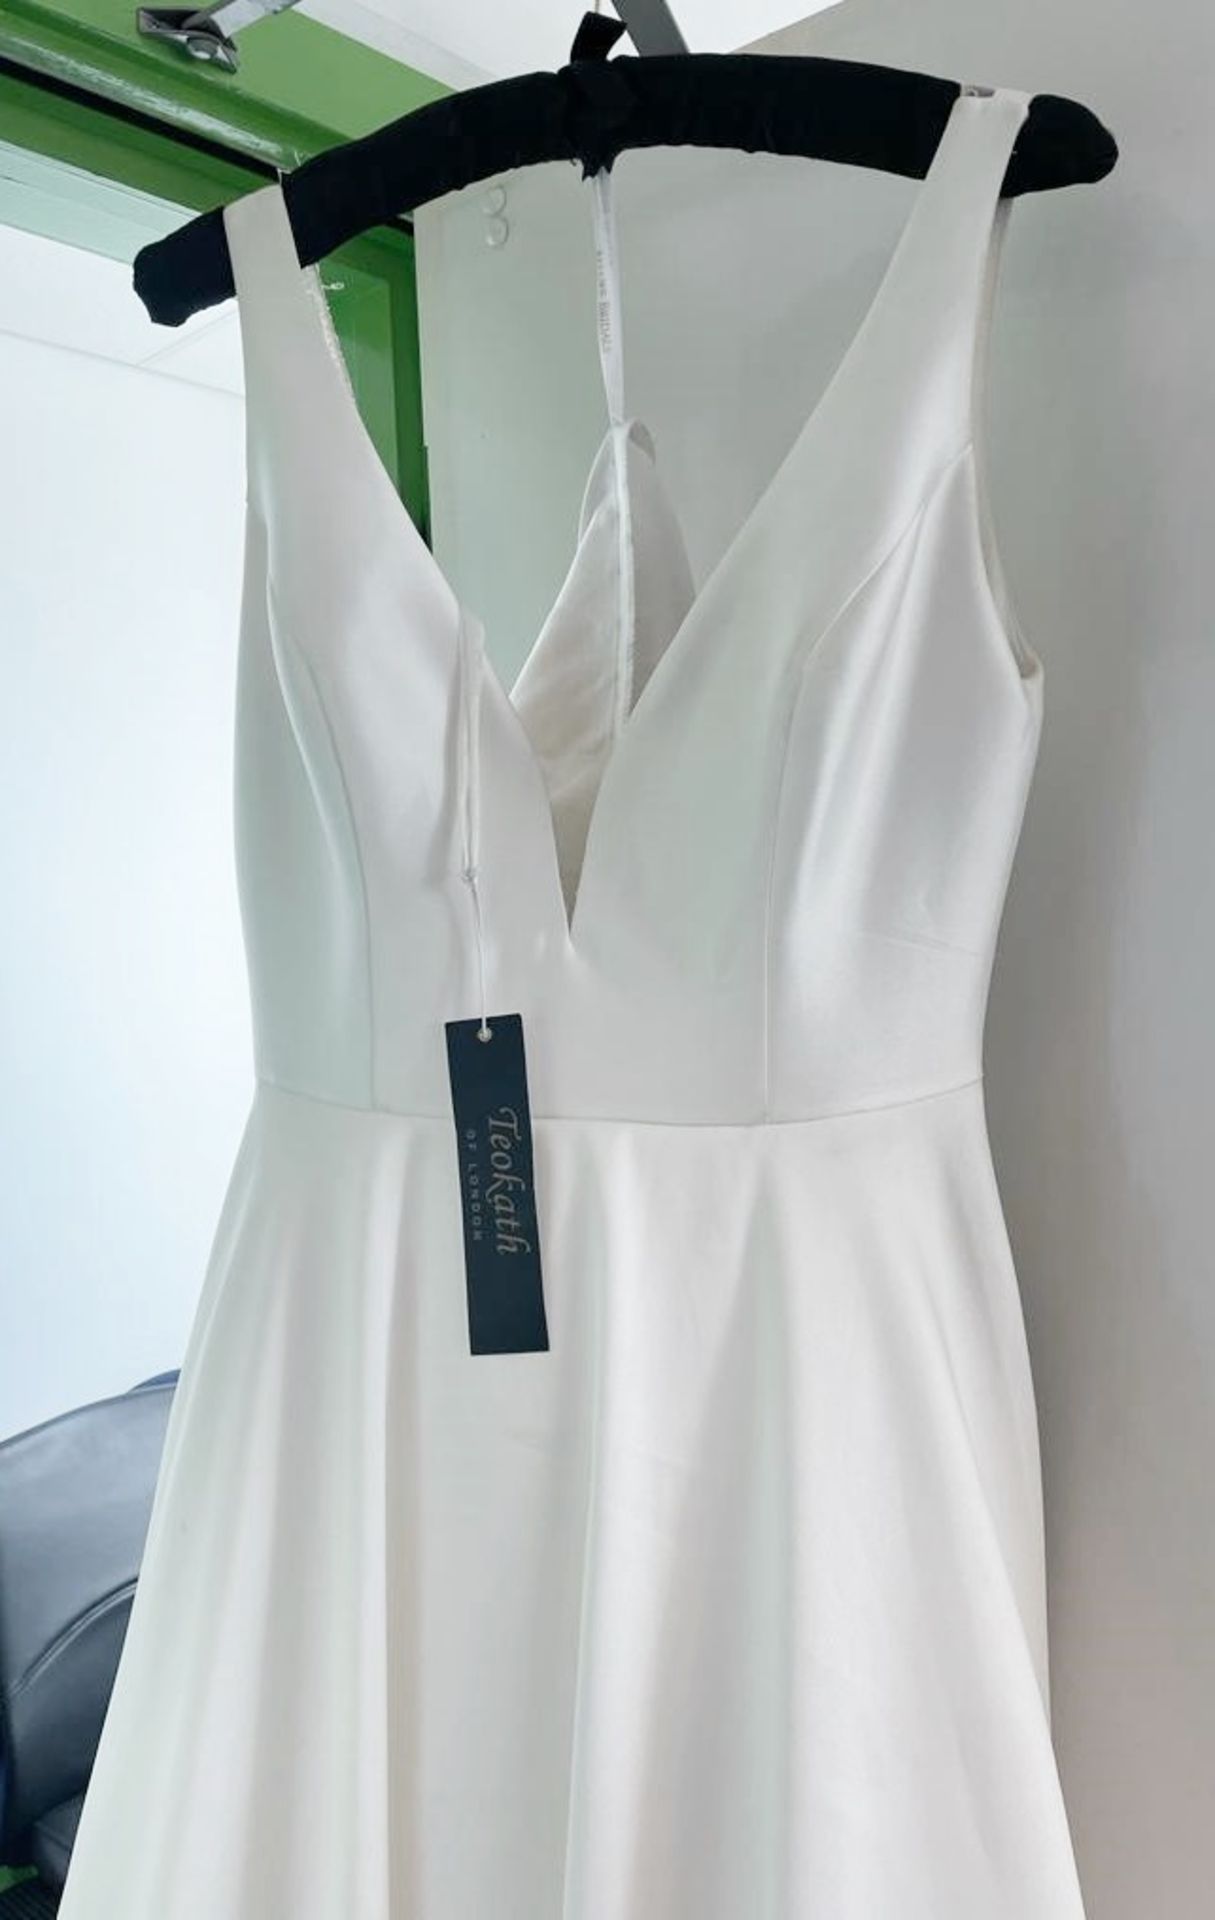 1 x ALLURE BRIDALS Sleeveless Designer Wedding Dress Bridal Gown - Style: 9813 - Size: UK 10 - - Image 7 of 13